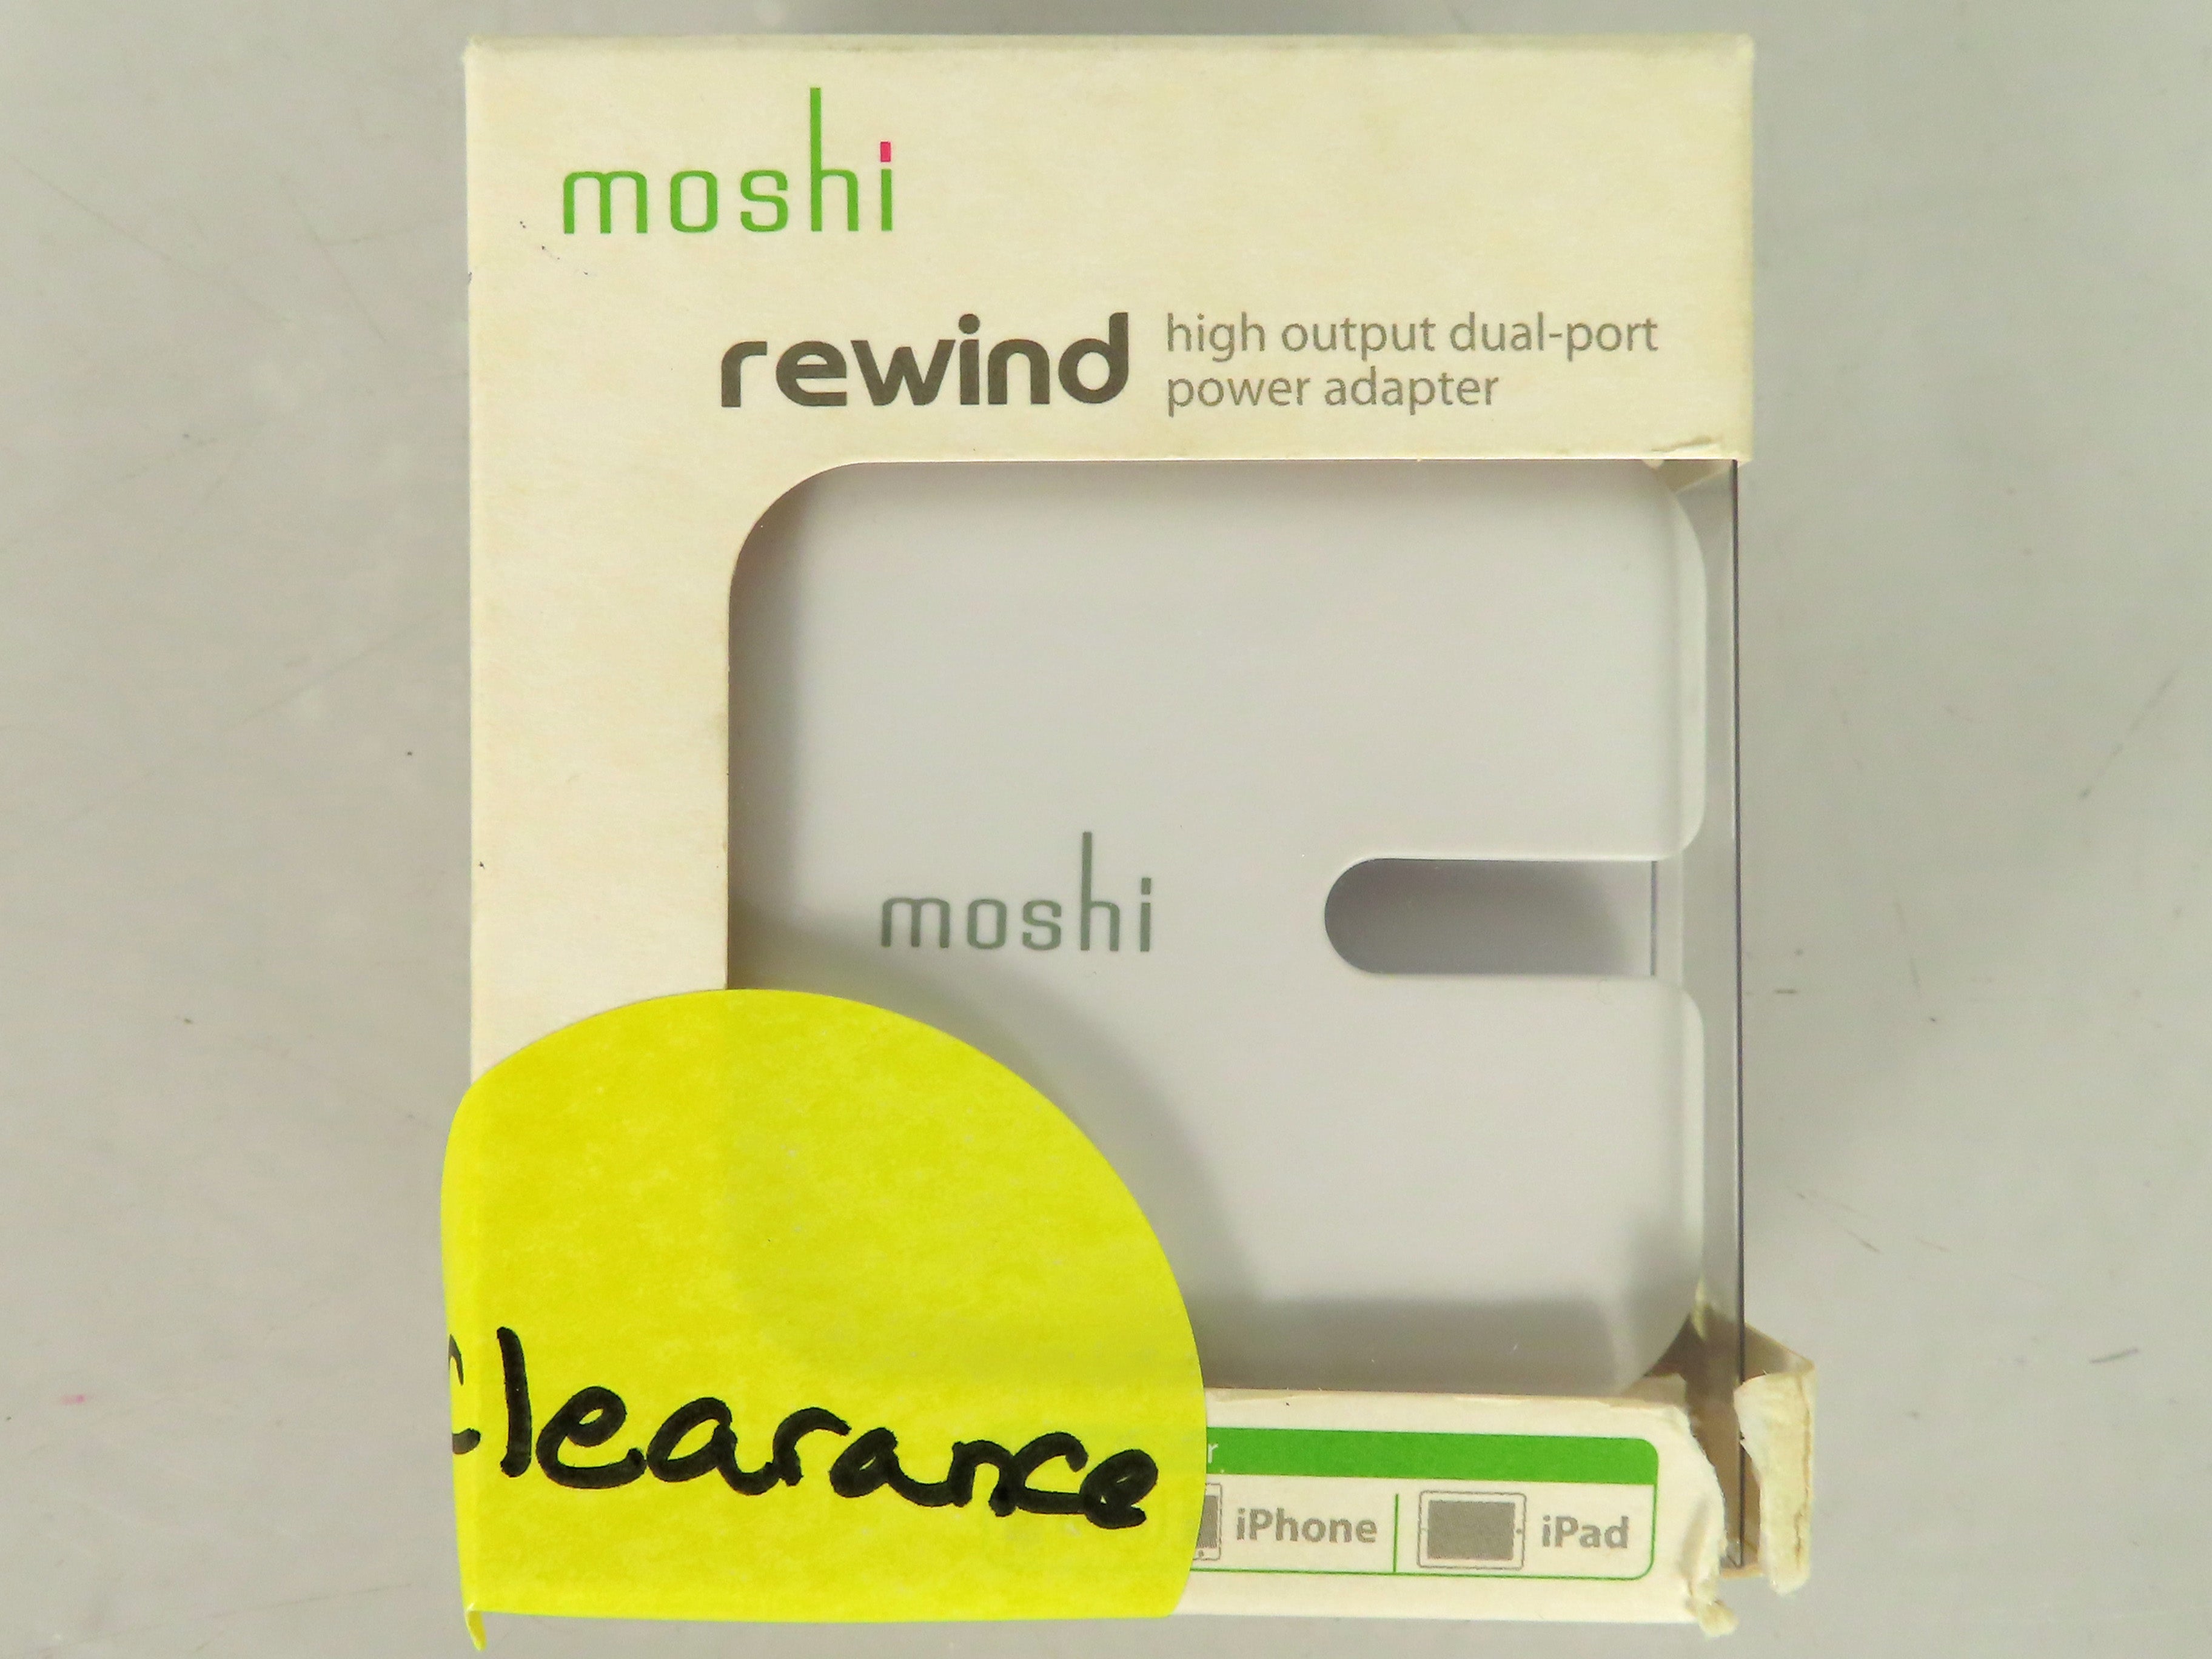 Moshi Rewind High Output Dual-Port Power Adapter